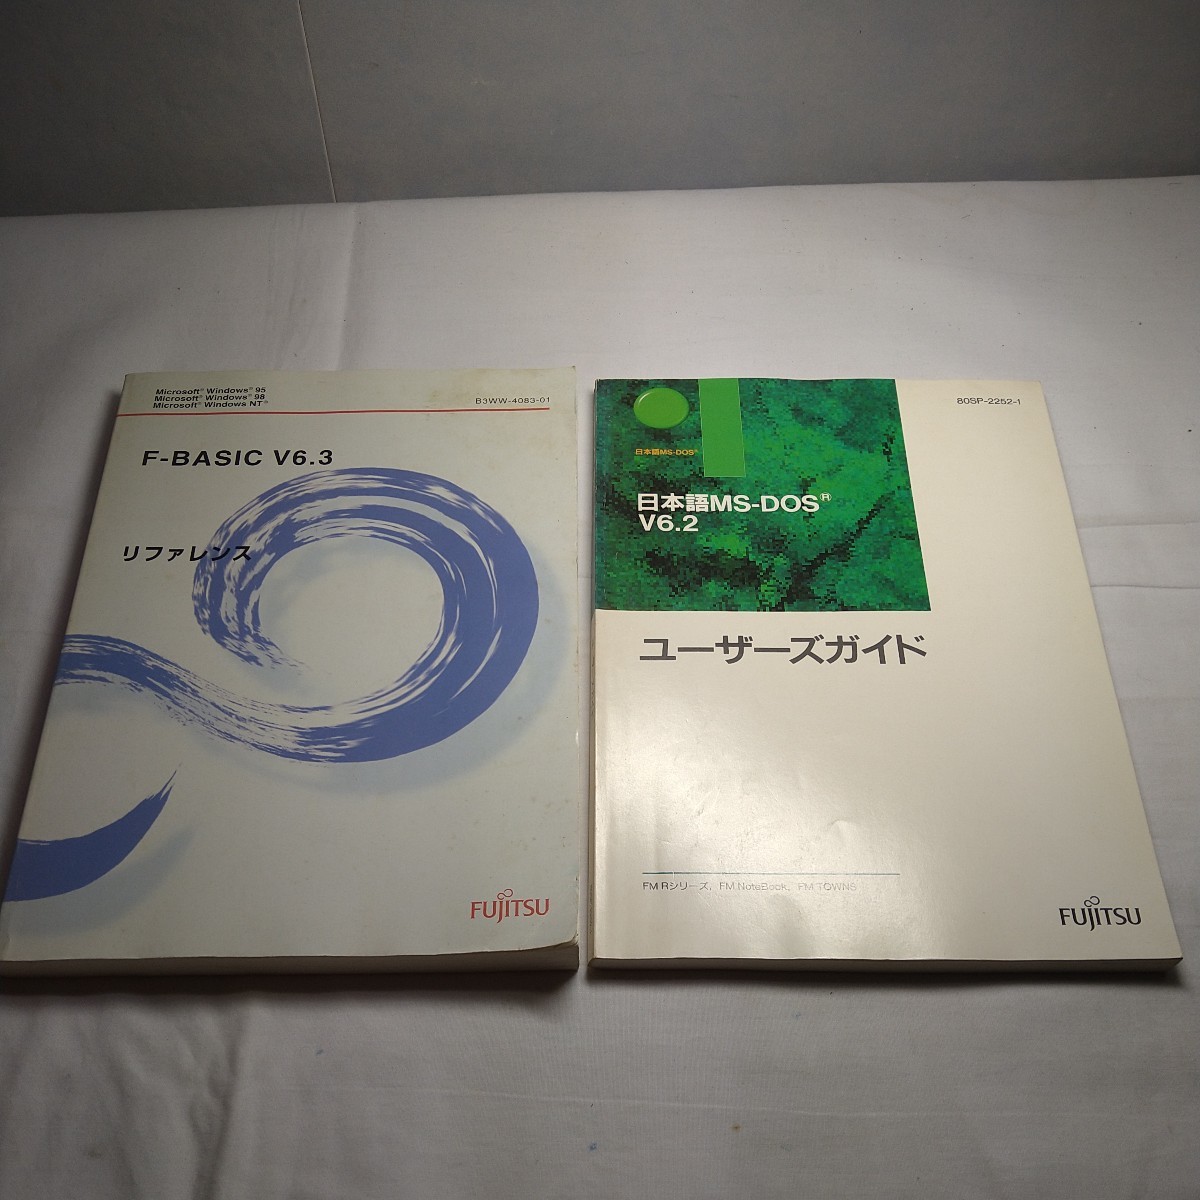 n-939◆富士通 F-BASIC v6.3 リファレンス 日本語MS-DOS V6.2 希少 本 古本 写真集 雑誌 印刷物 ◆ 状態は画像で確認してください。_画像1